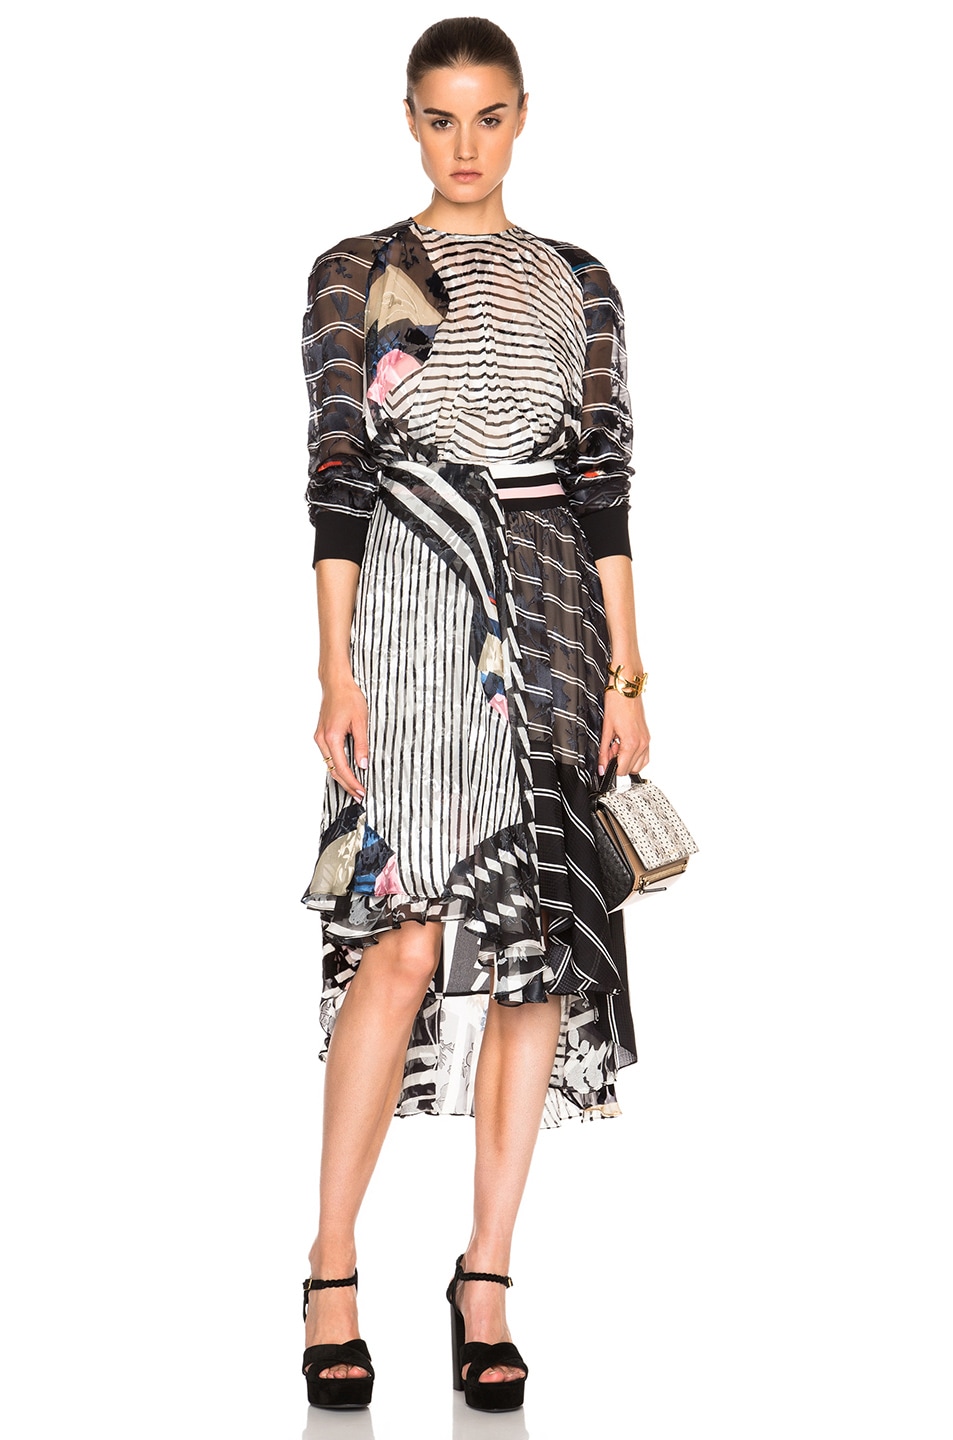 Image 1 of Preen by Thornton Bregazzi Caliste Dress in Black, Stripes & White Boxes